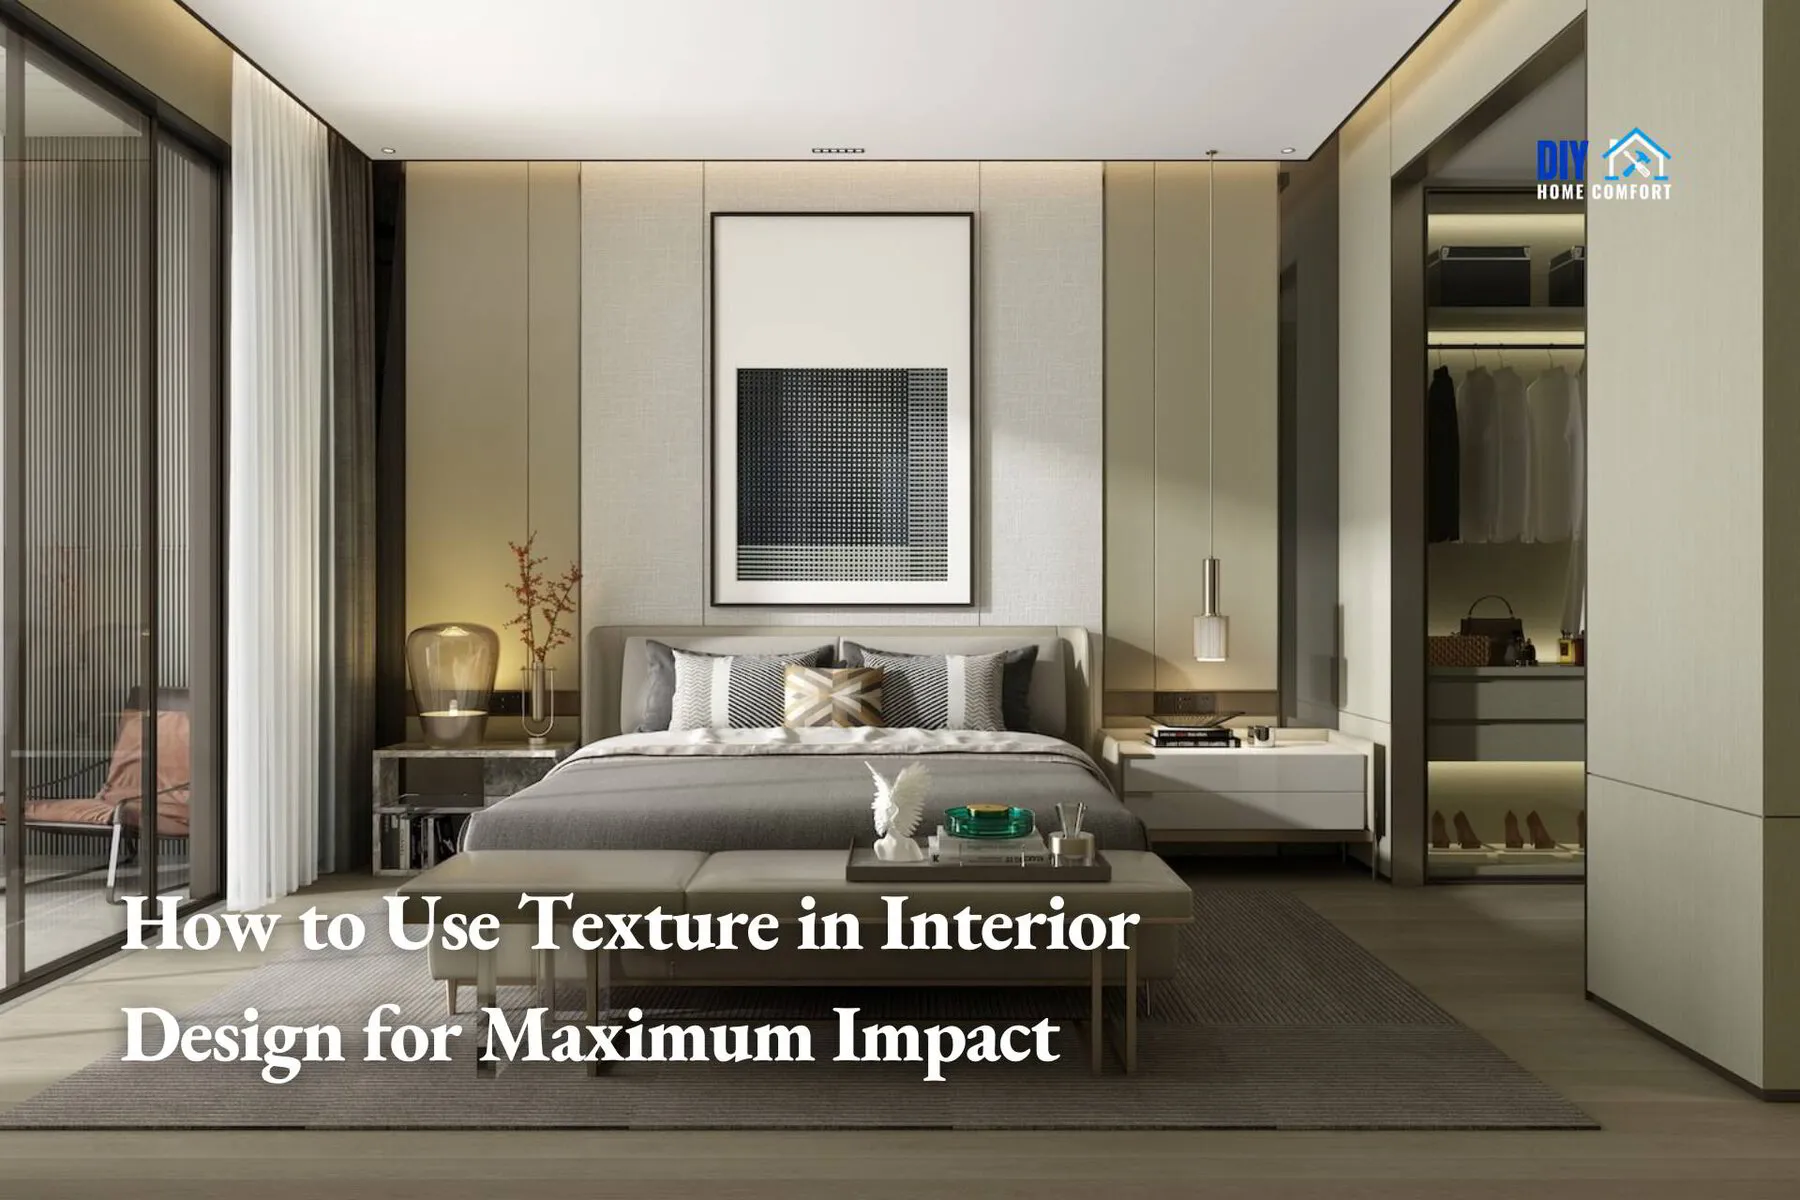 How to Use Texture in Interior Design for Maximum Impact | DIY Home Comfort